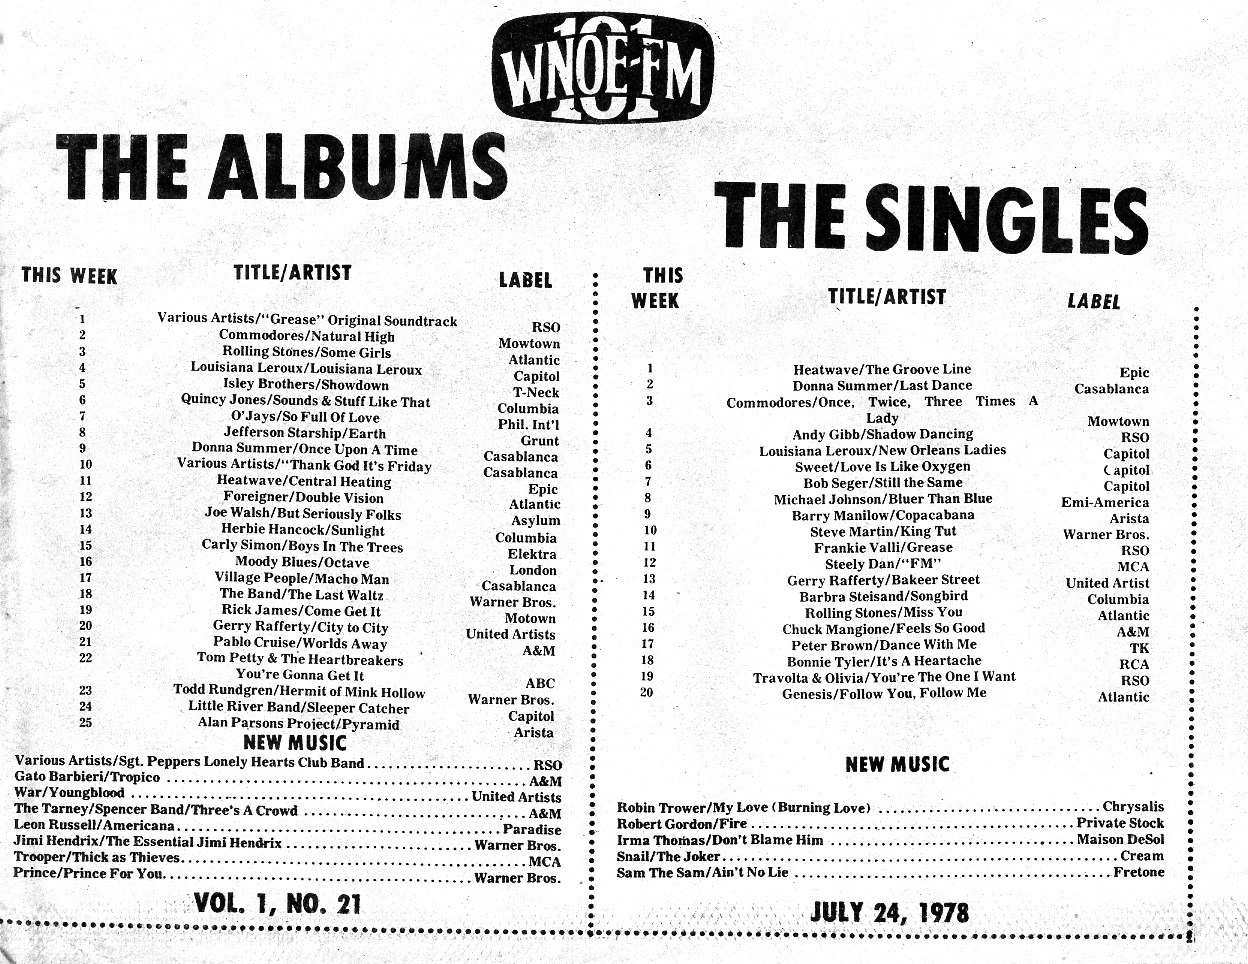 WNOE-FM Music Chart 7/24/78